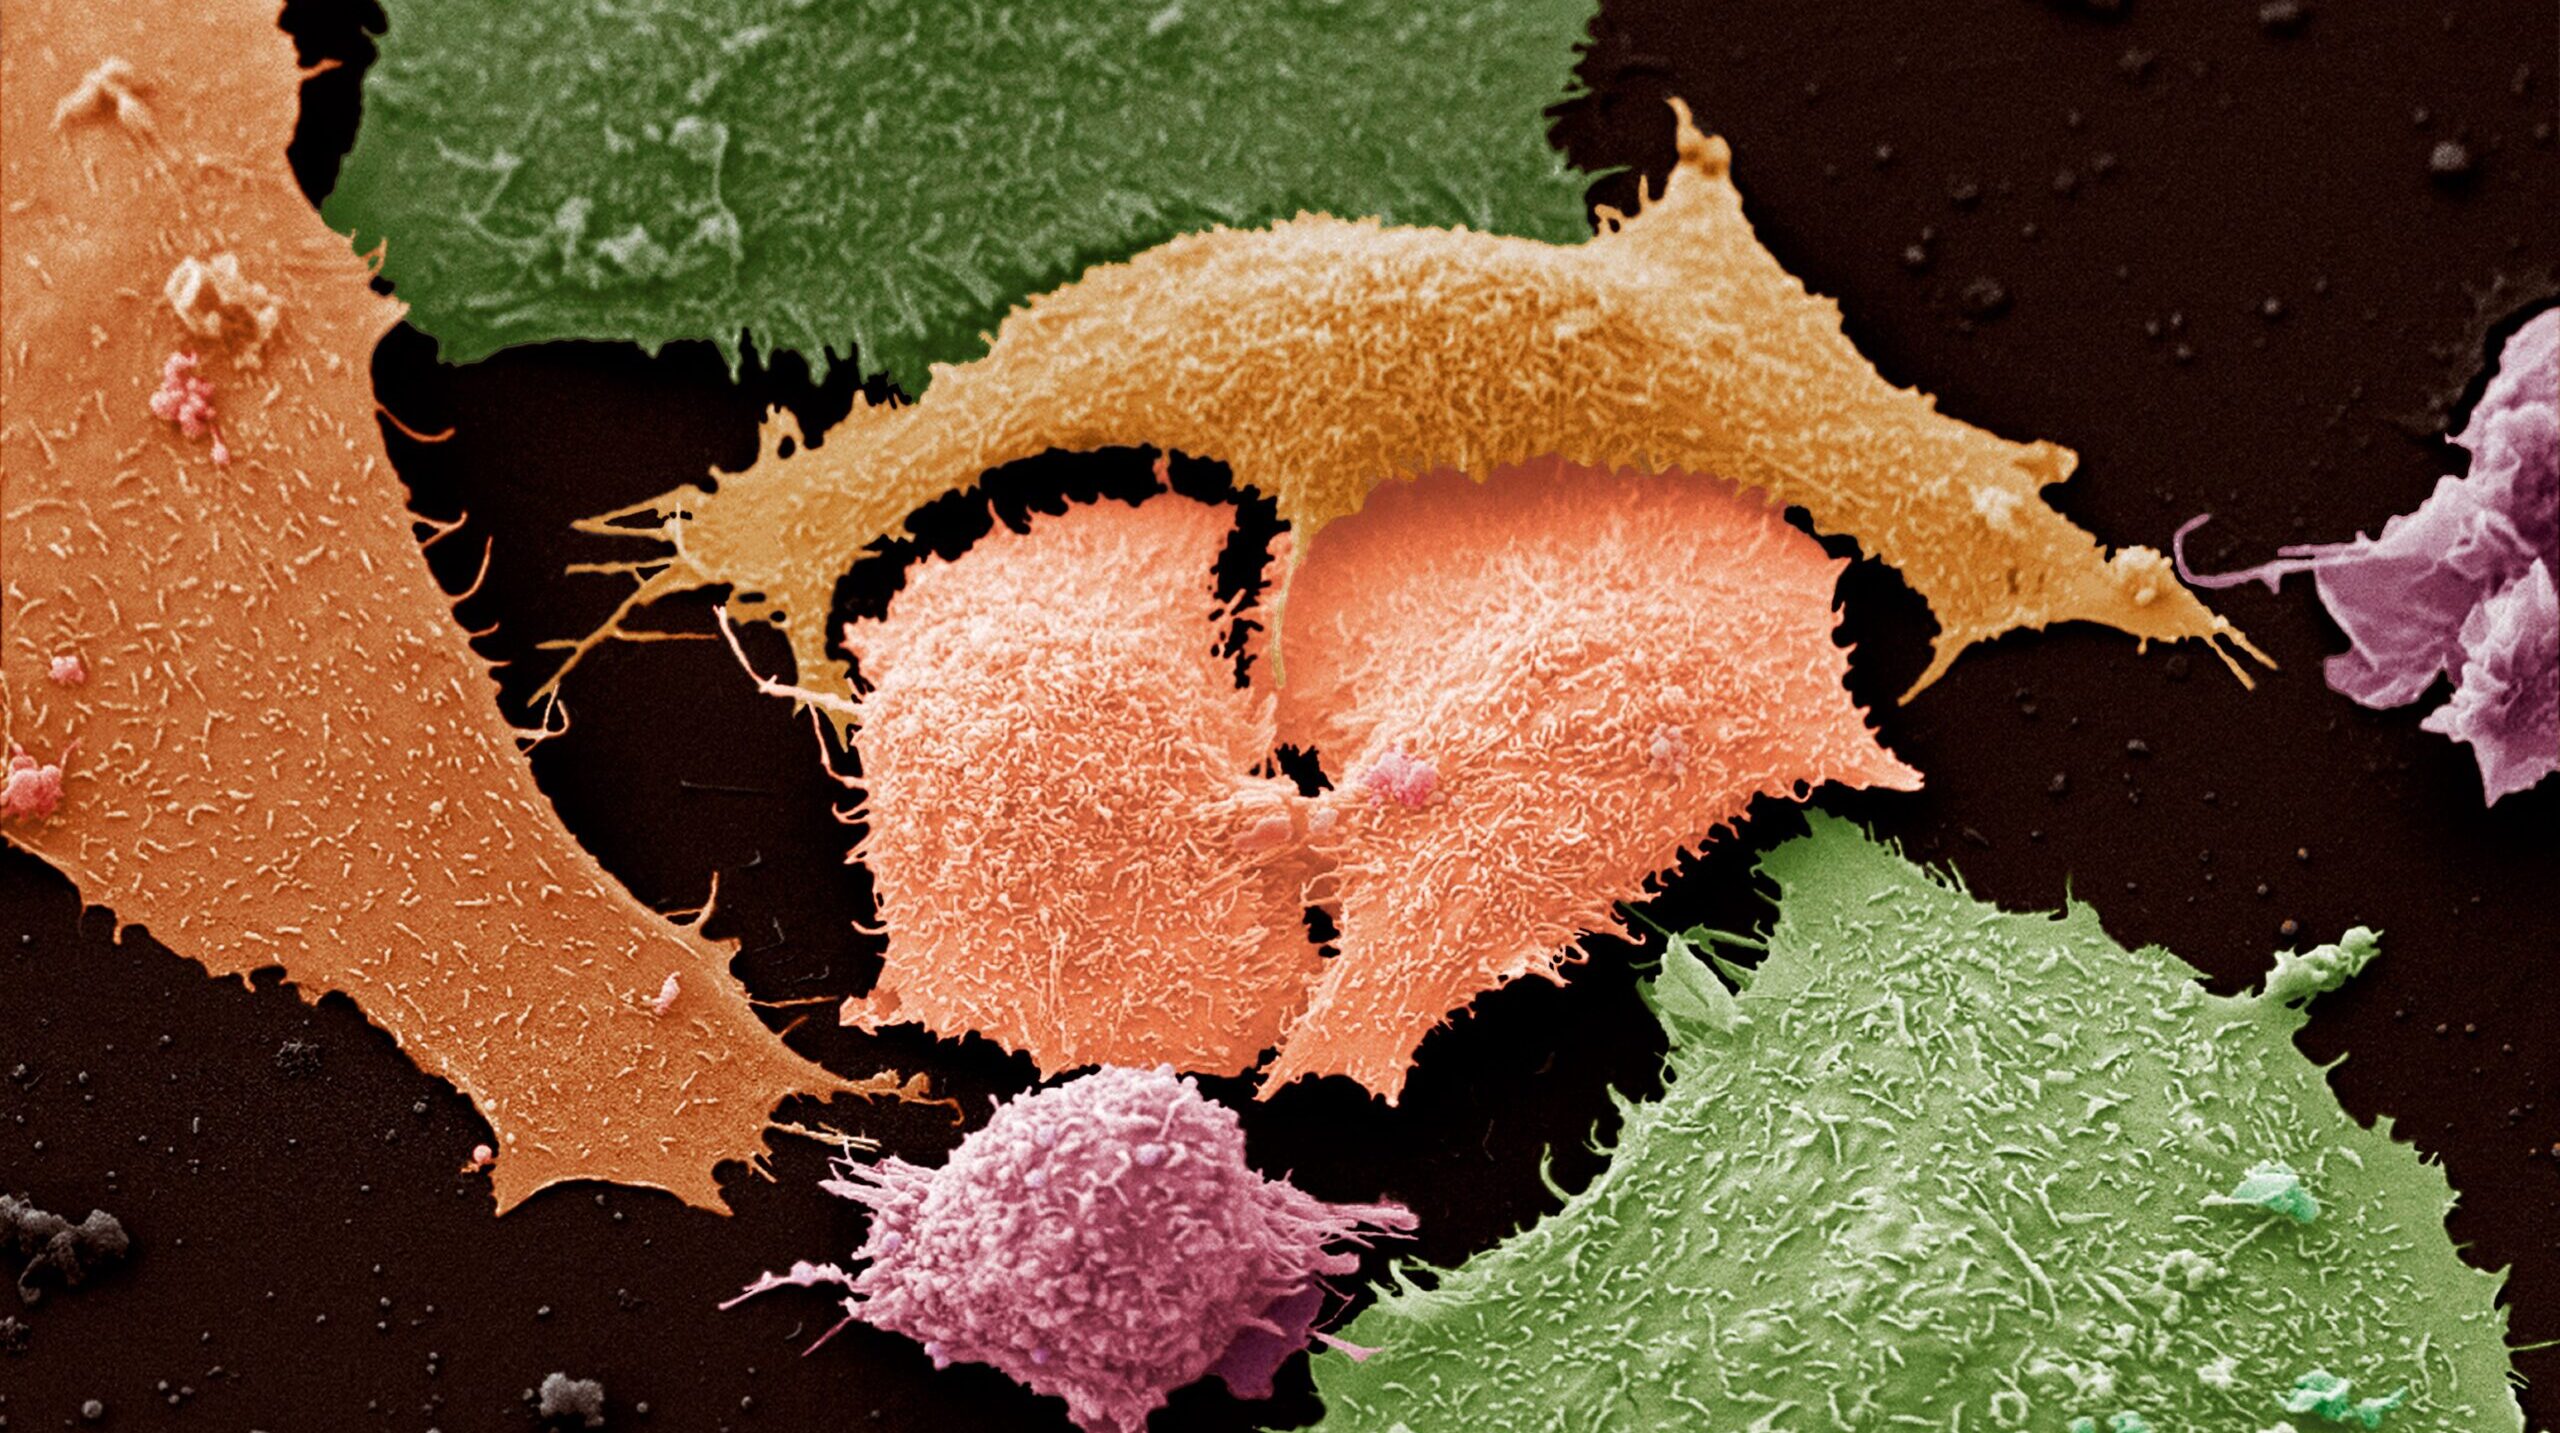 Lung cancer cells seen through a microscope.